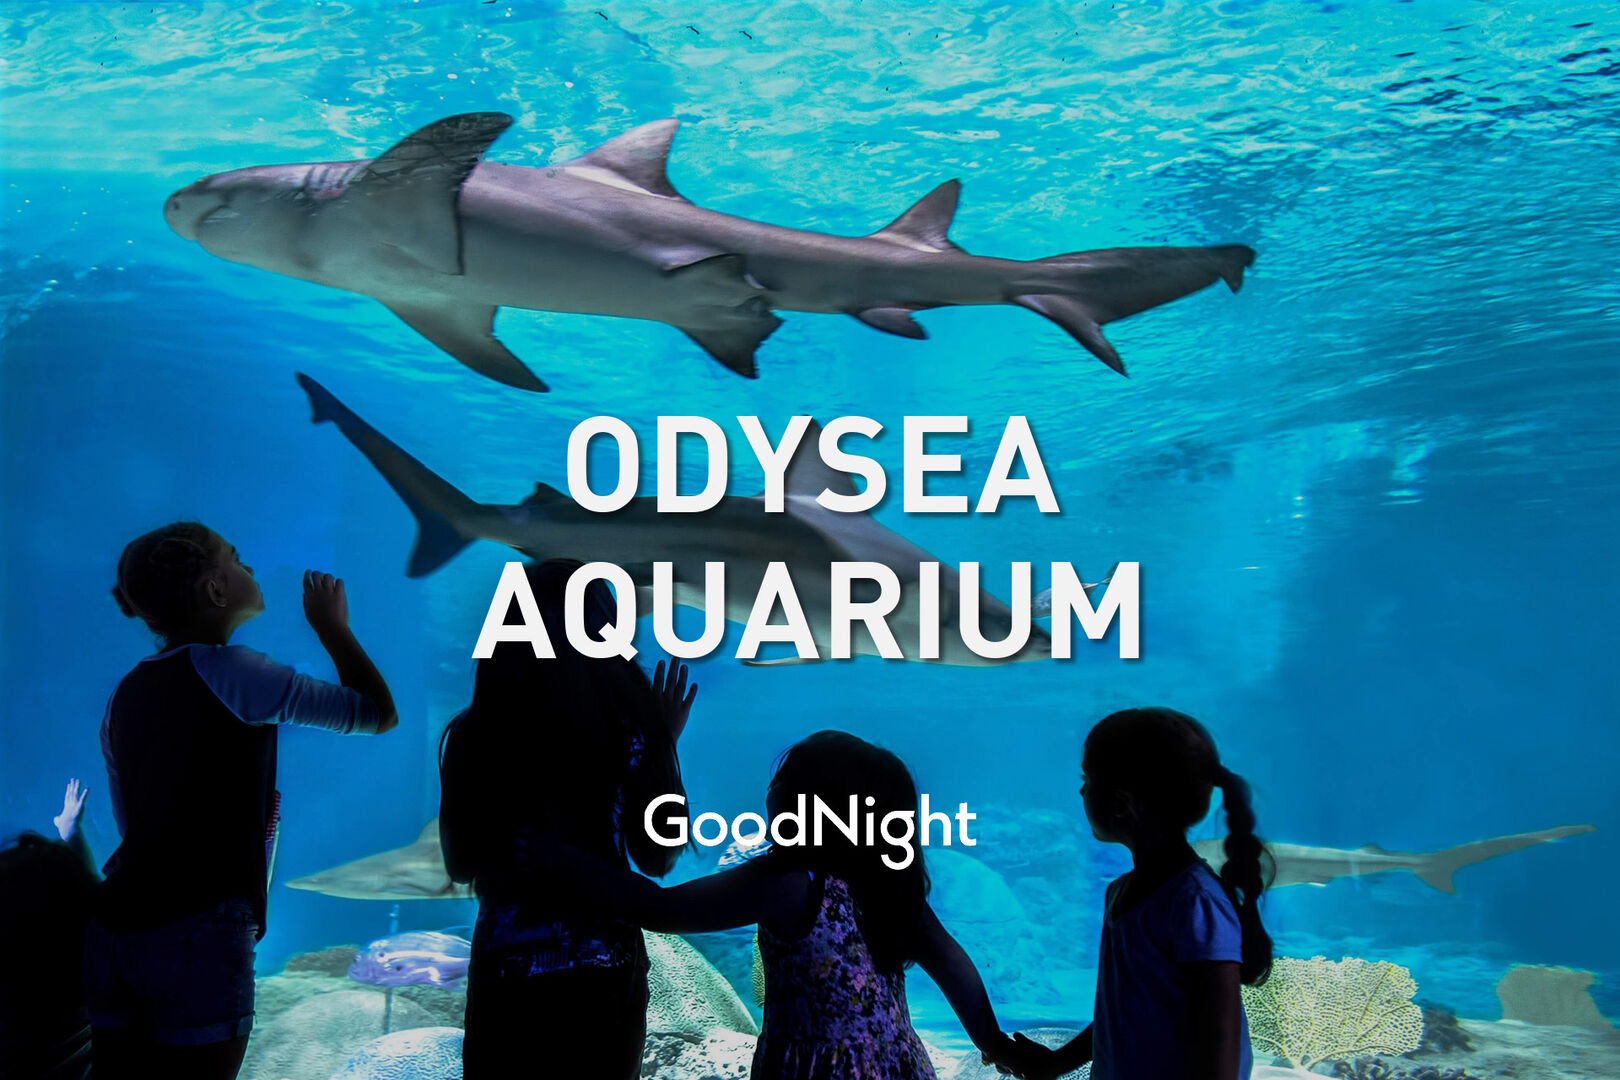 20 mins to Odysea Aquarium